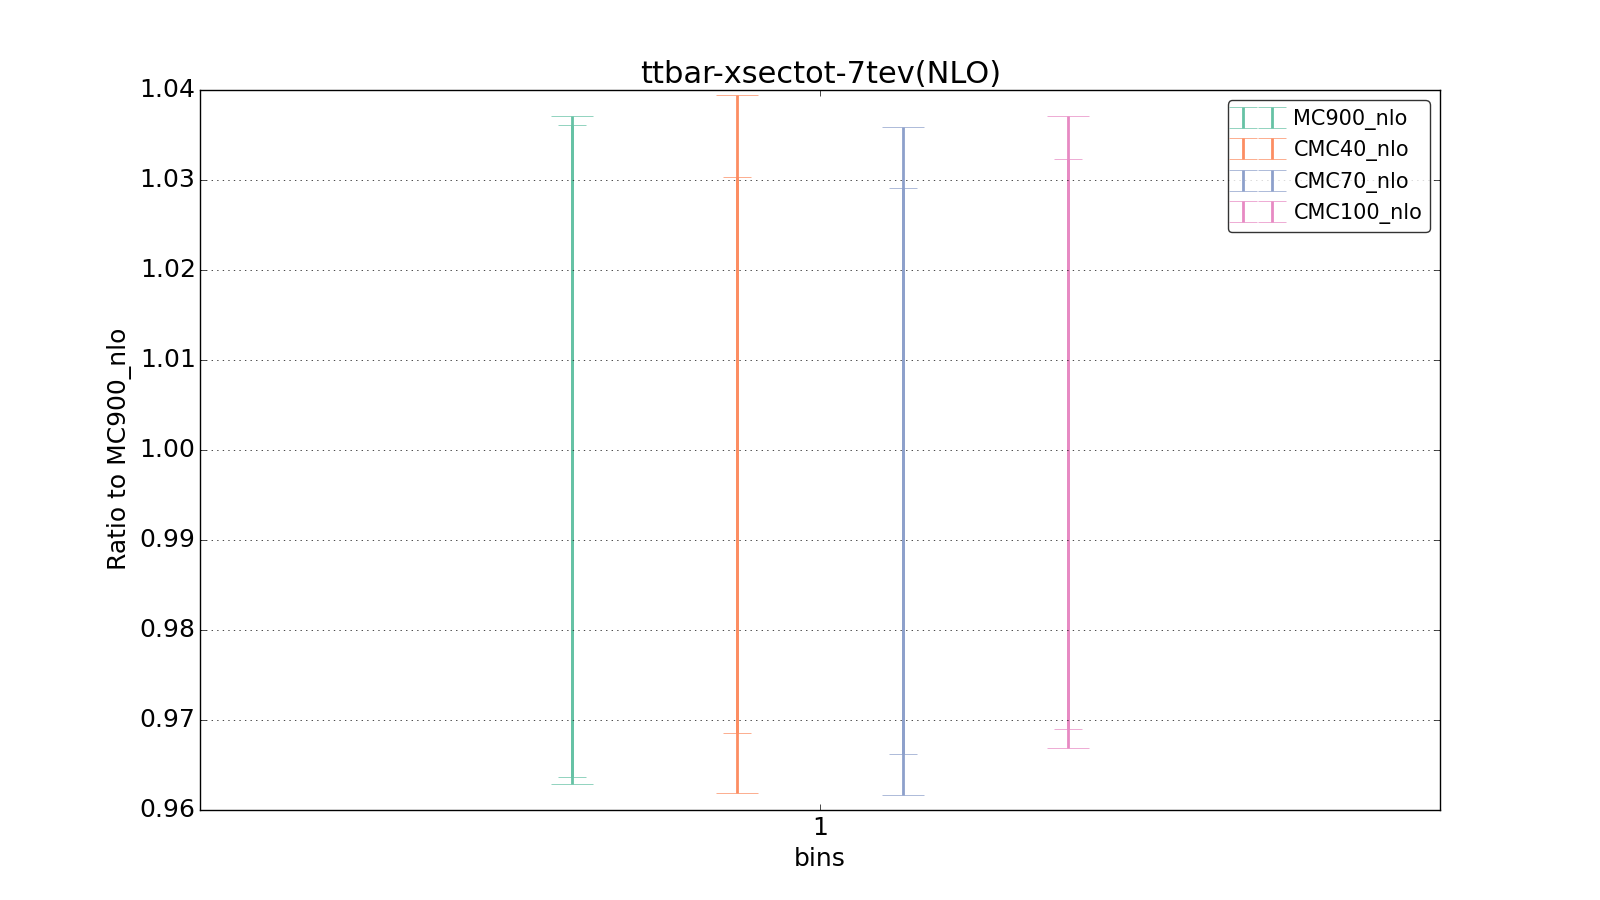 figure plots/CMCpheno/group_1_ciplot_ttbar-xsectot-7tev(NLO).png